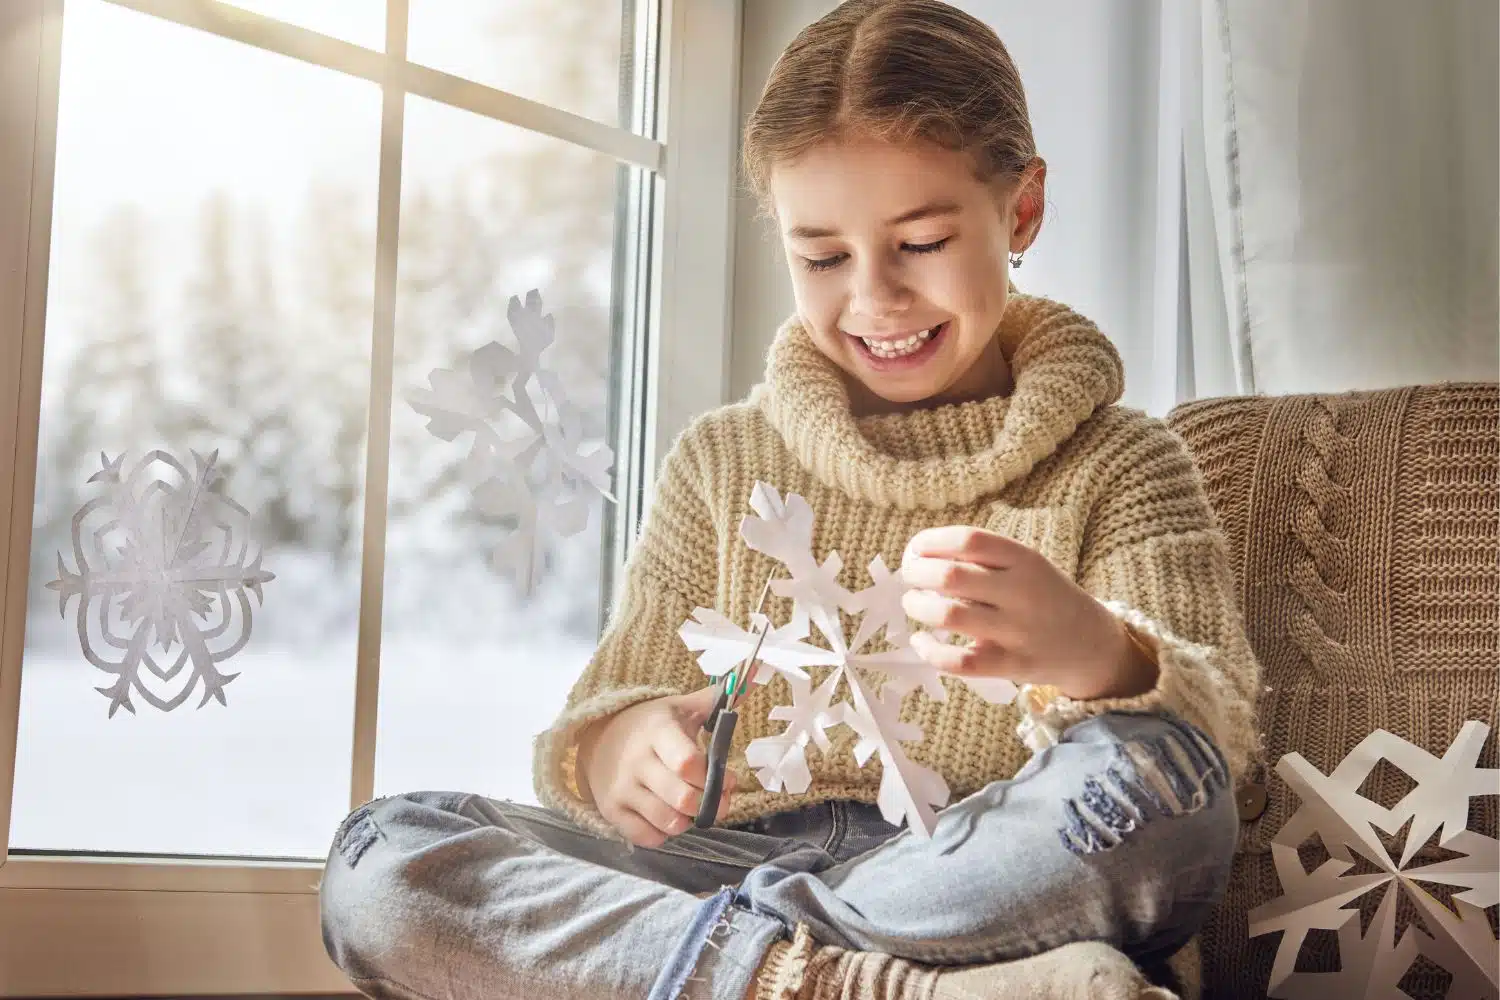 7 Easy Ways to Make Snowflakes for Christmas